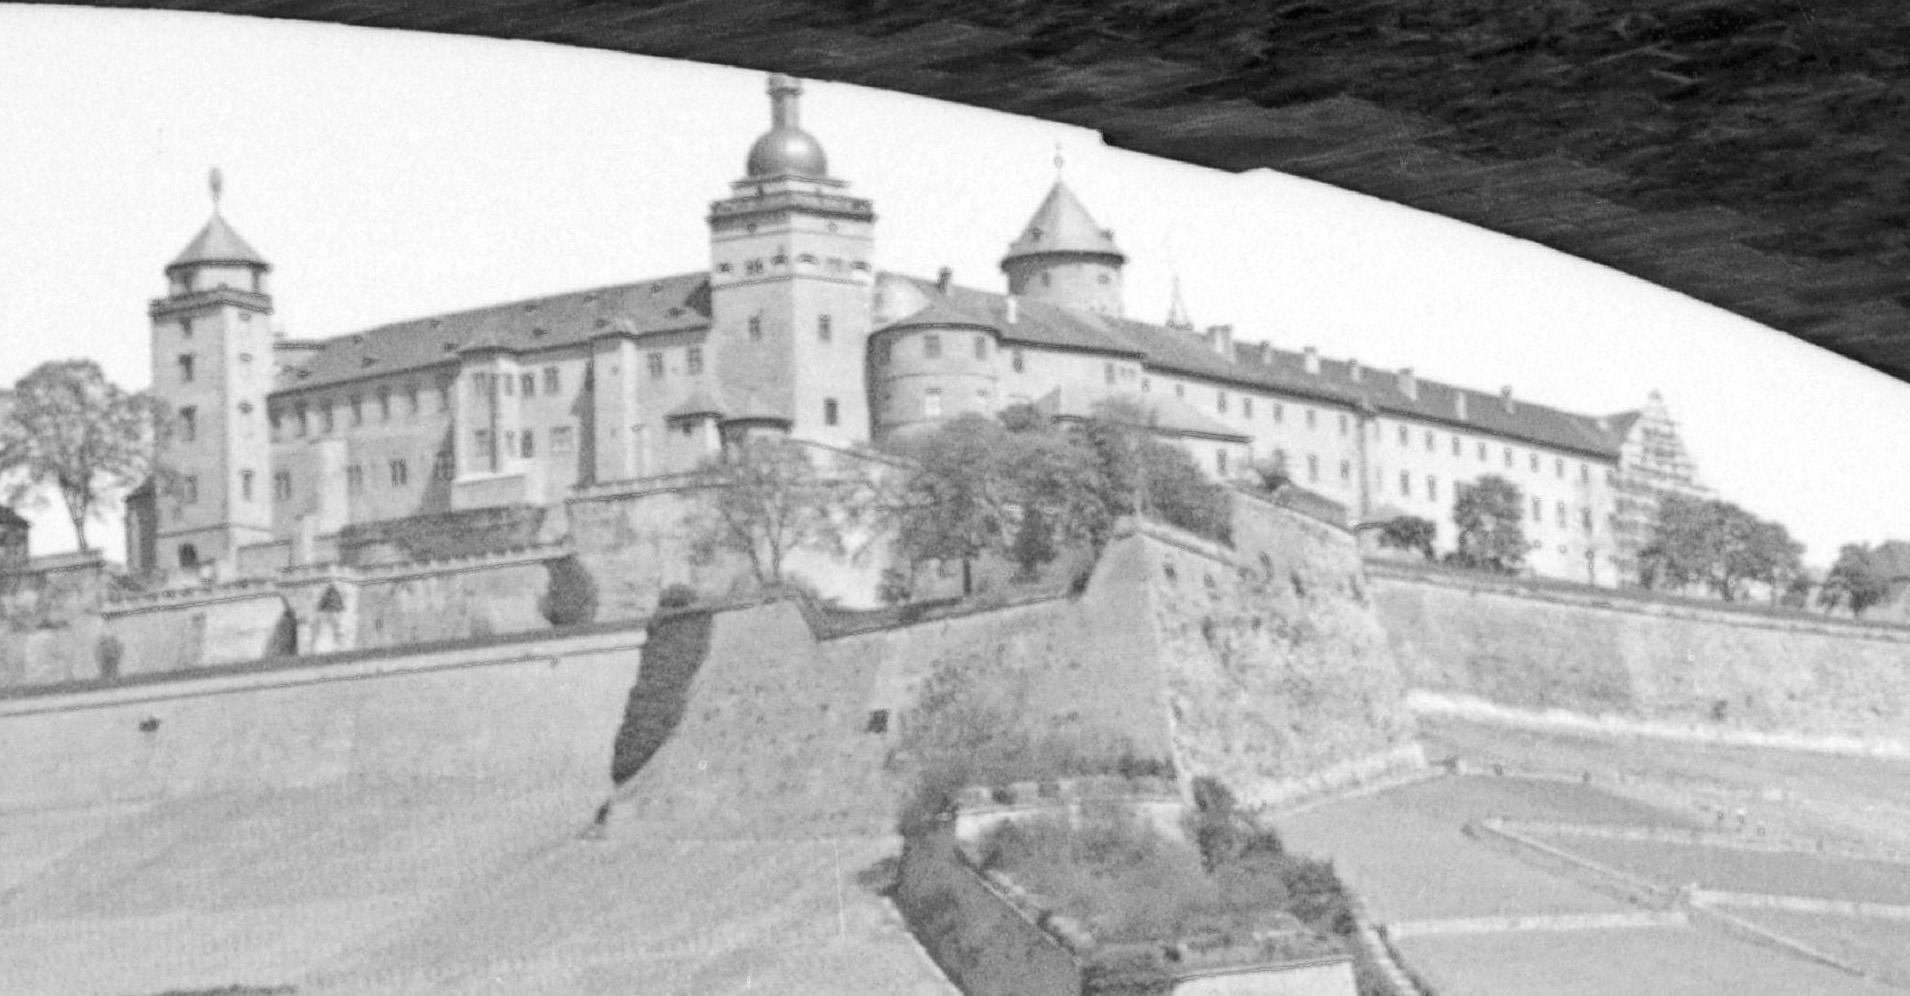 Würzburg, Germany 1935, Printed Later - Modern Photograph by Karl Heinrich Lämmel